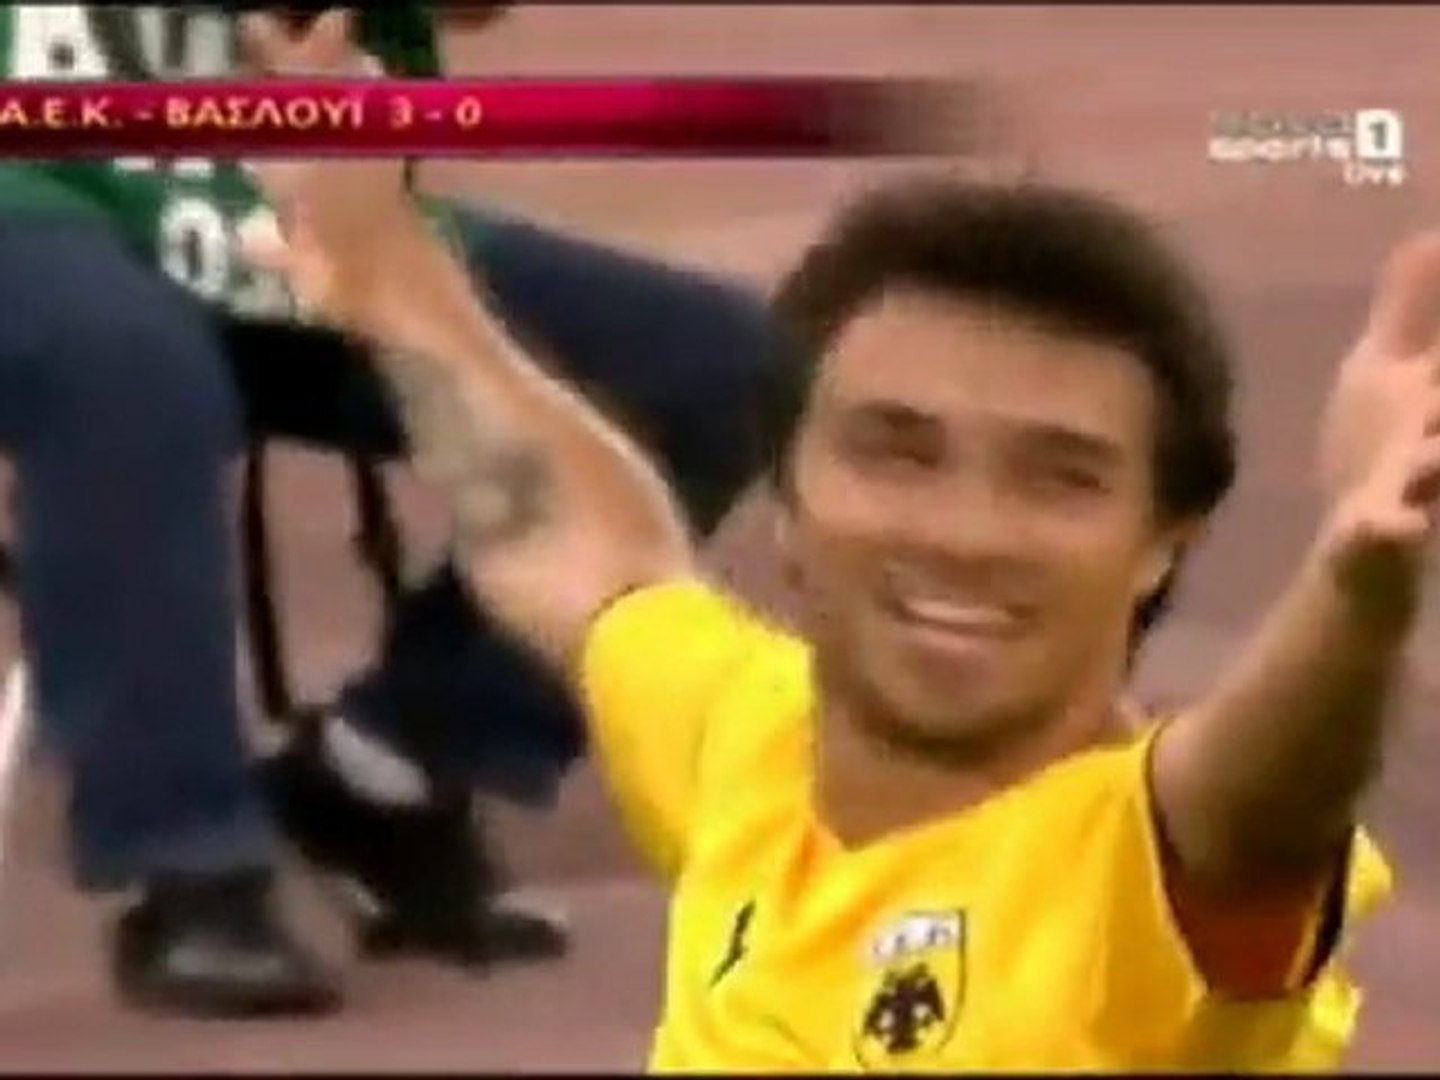 AEK - Vaslui 3-0_besto goal Nacho Scocco in Greece - video Dailymotion